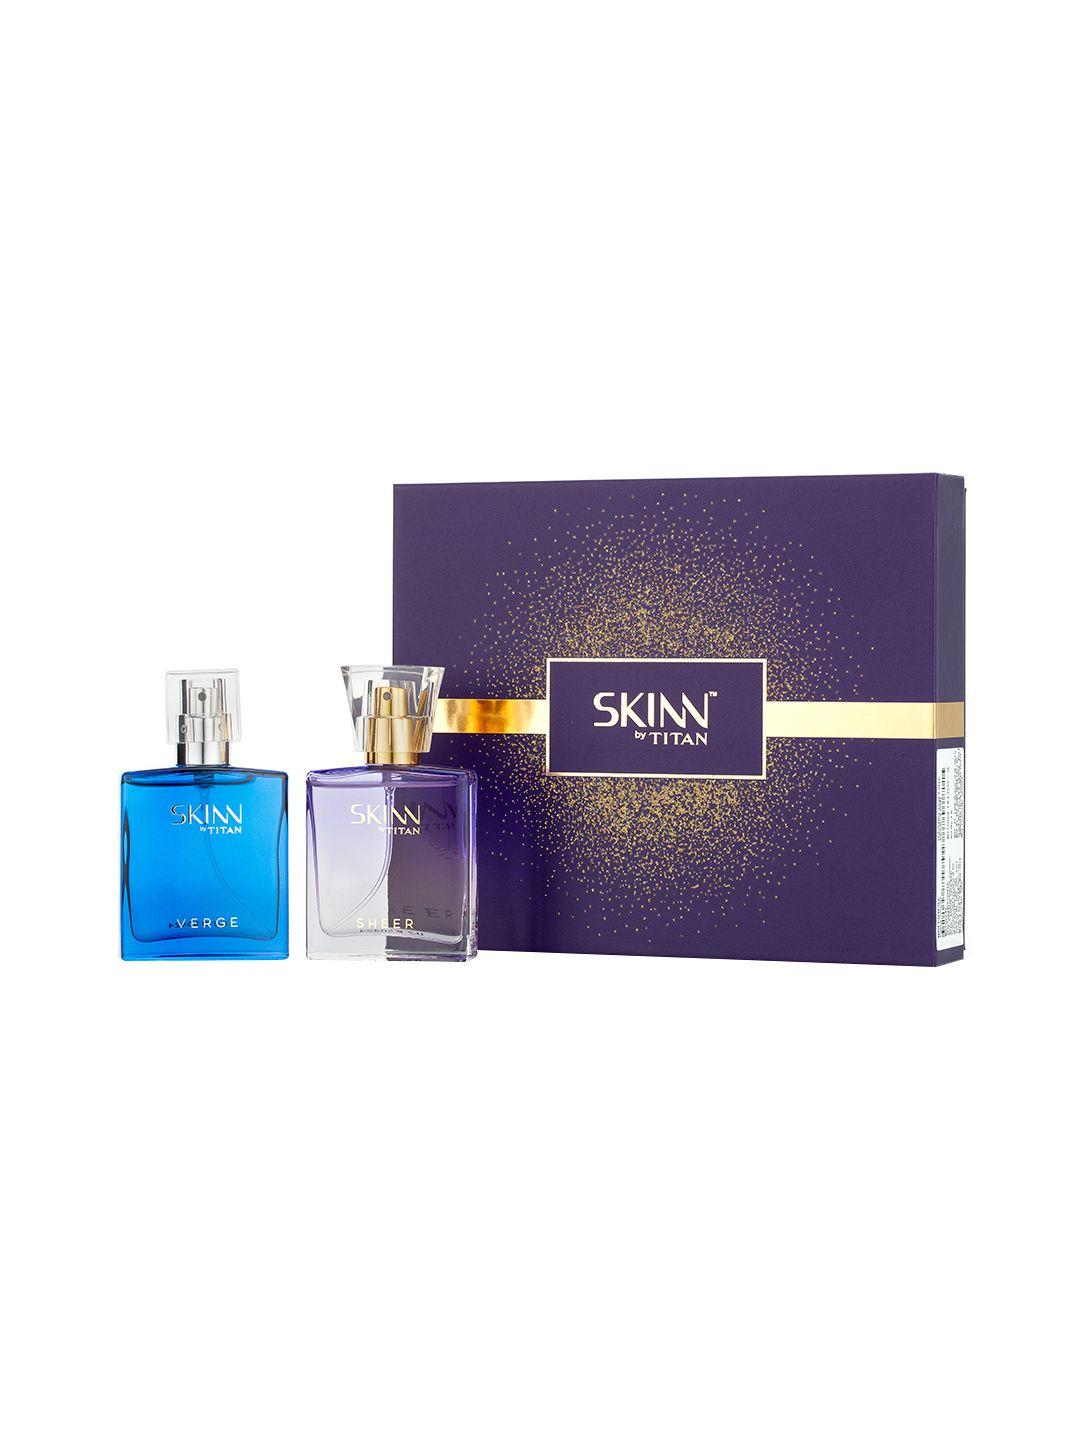 skinn-by-titan-set-of-2-verge-&-sheer-mini-gift-set-perfumes-for-his-&-her